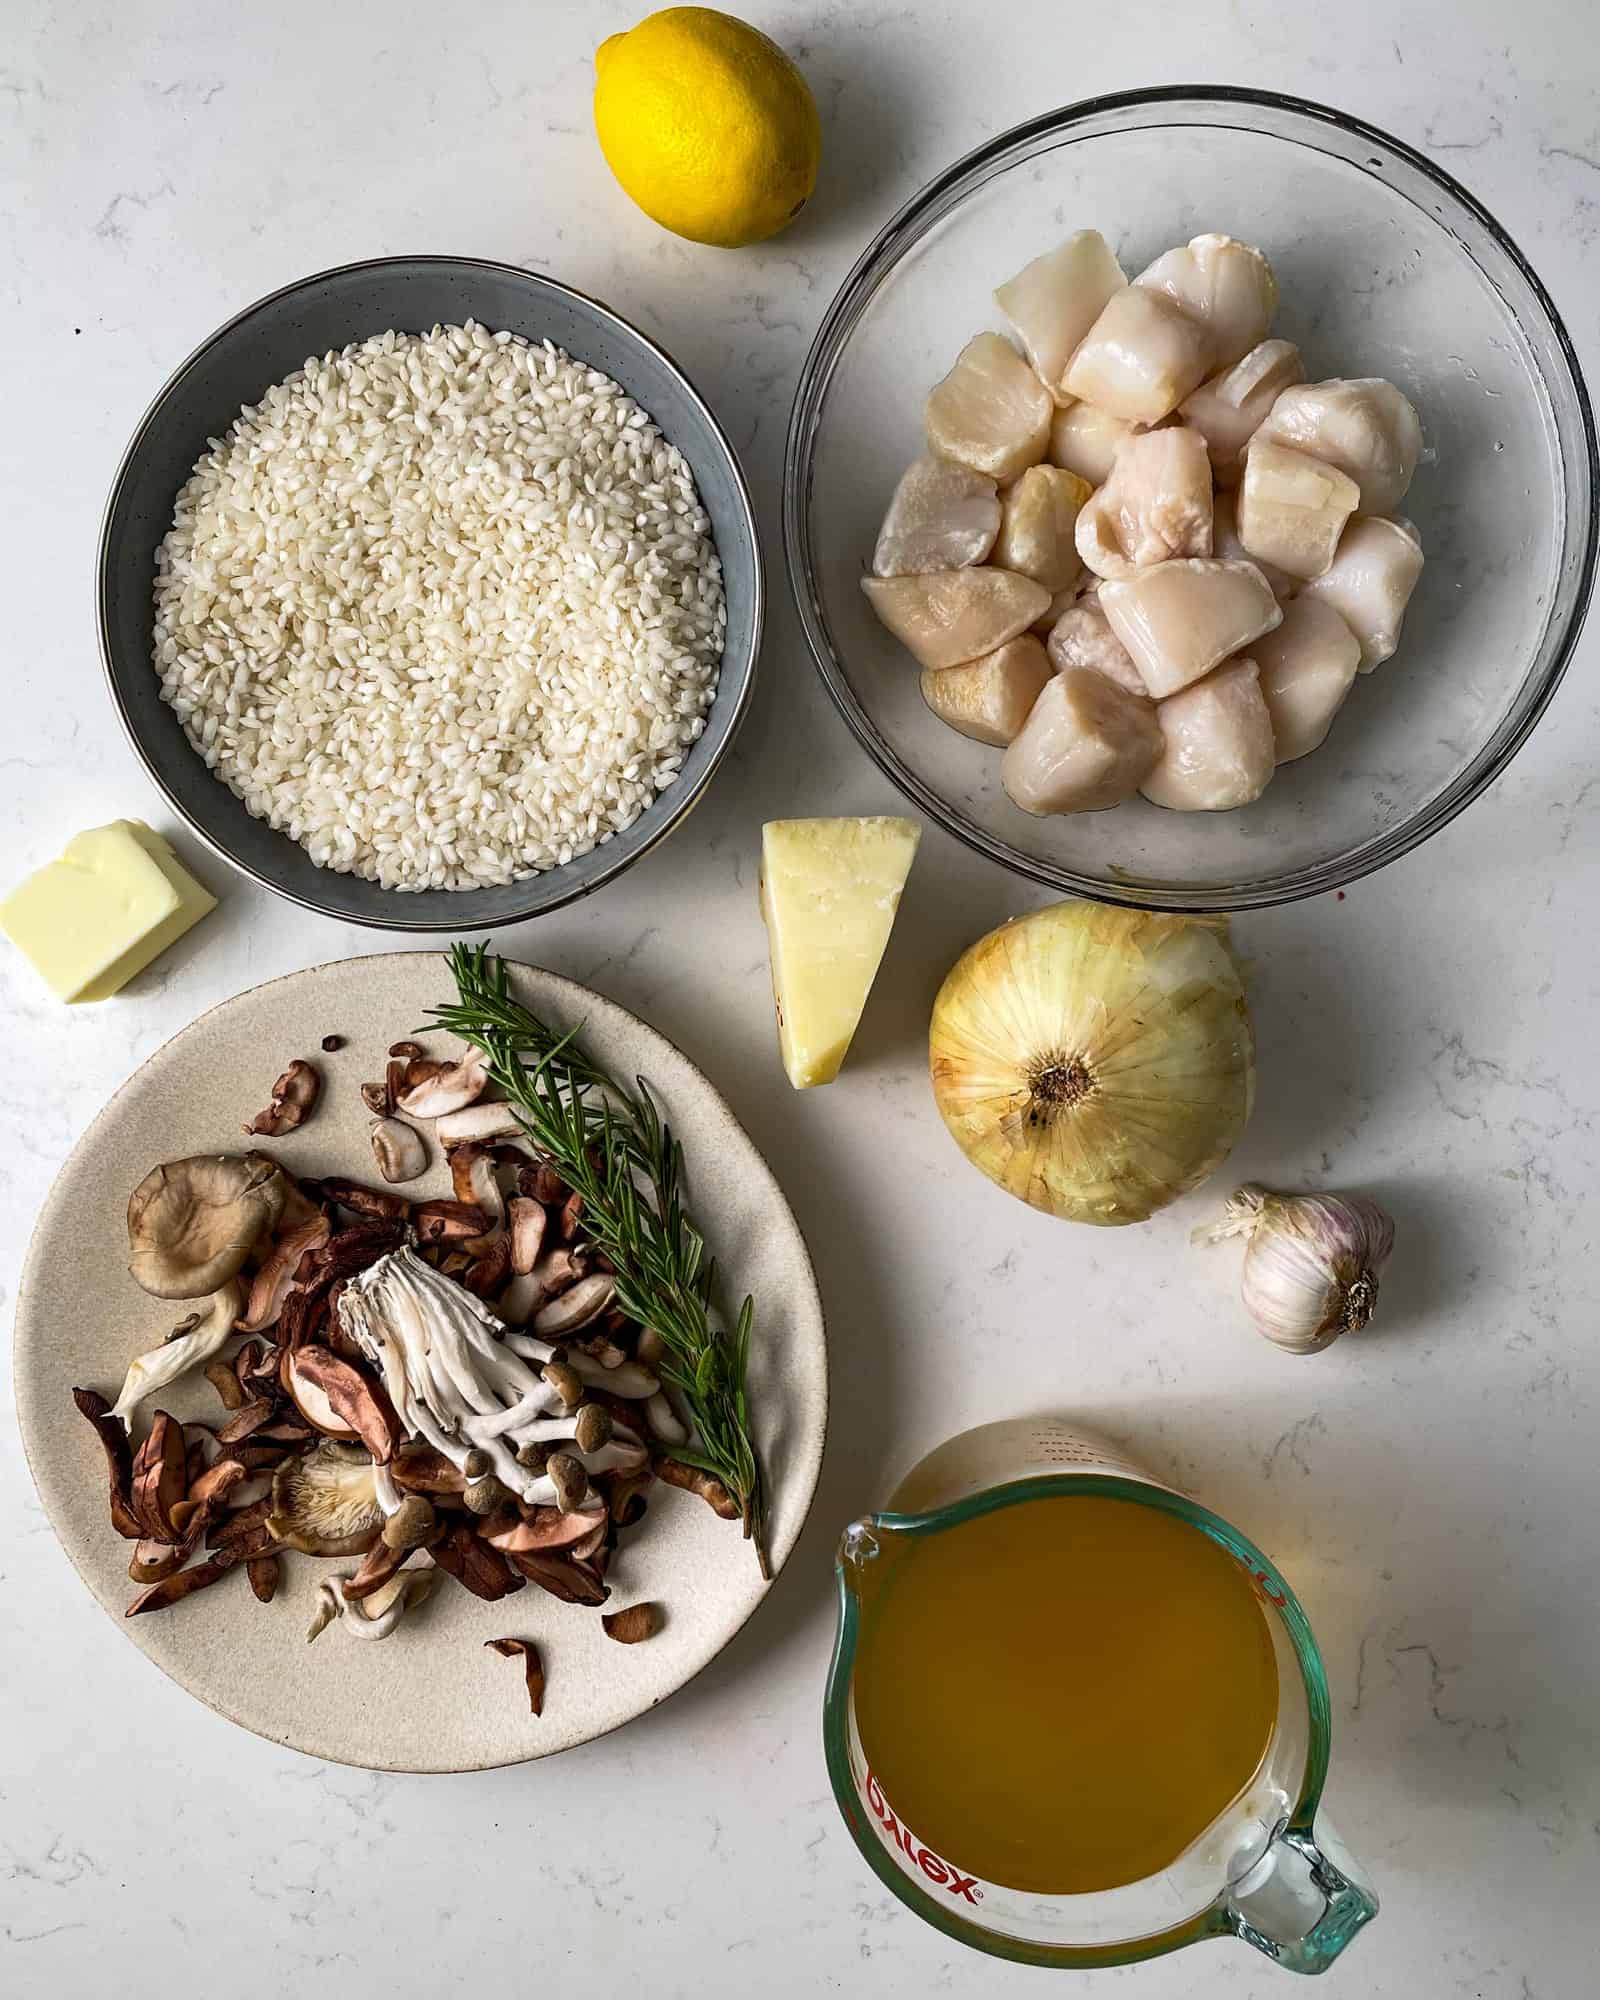 ingredients to make mushroom risotto - arborio rice, seasonings, chicken broth, dry white wine, parmesan, lemon juice and zest, mushrooms, onions, and garlic.